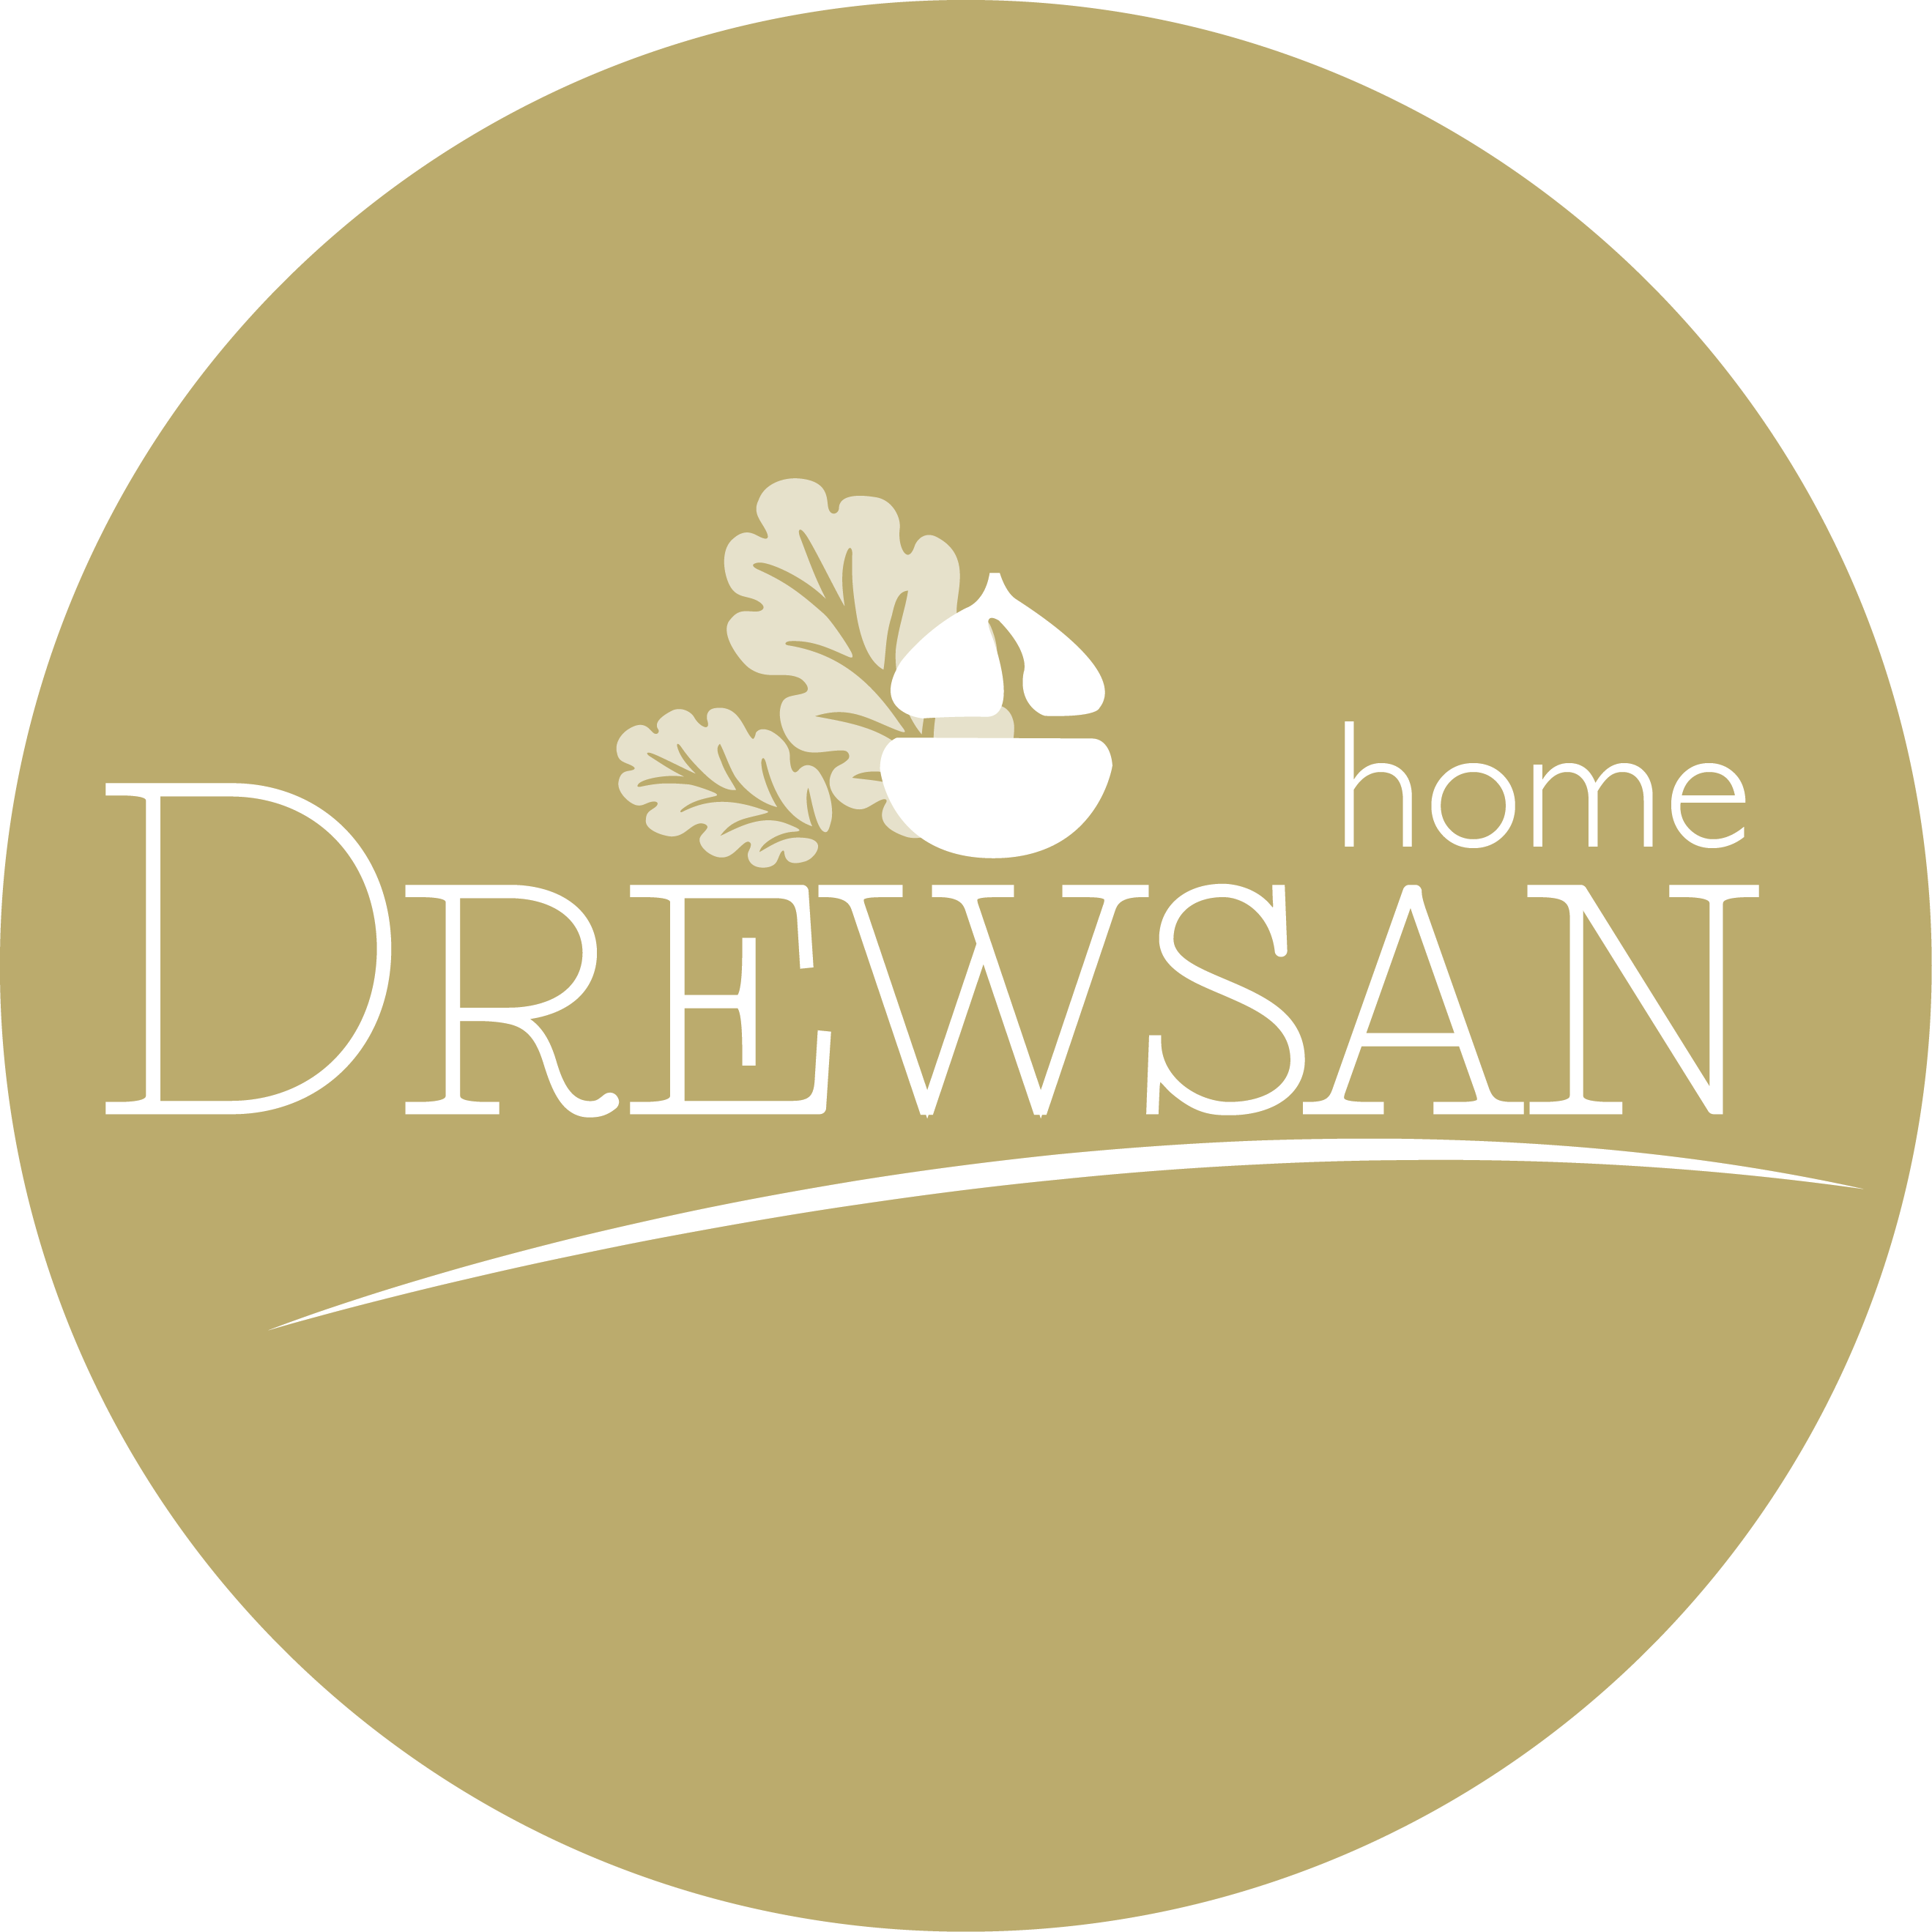 DREWSAN HOME LTD